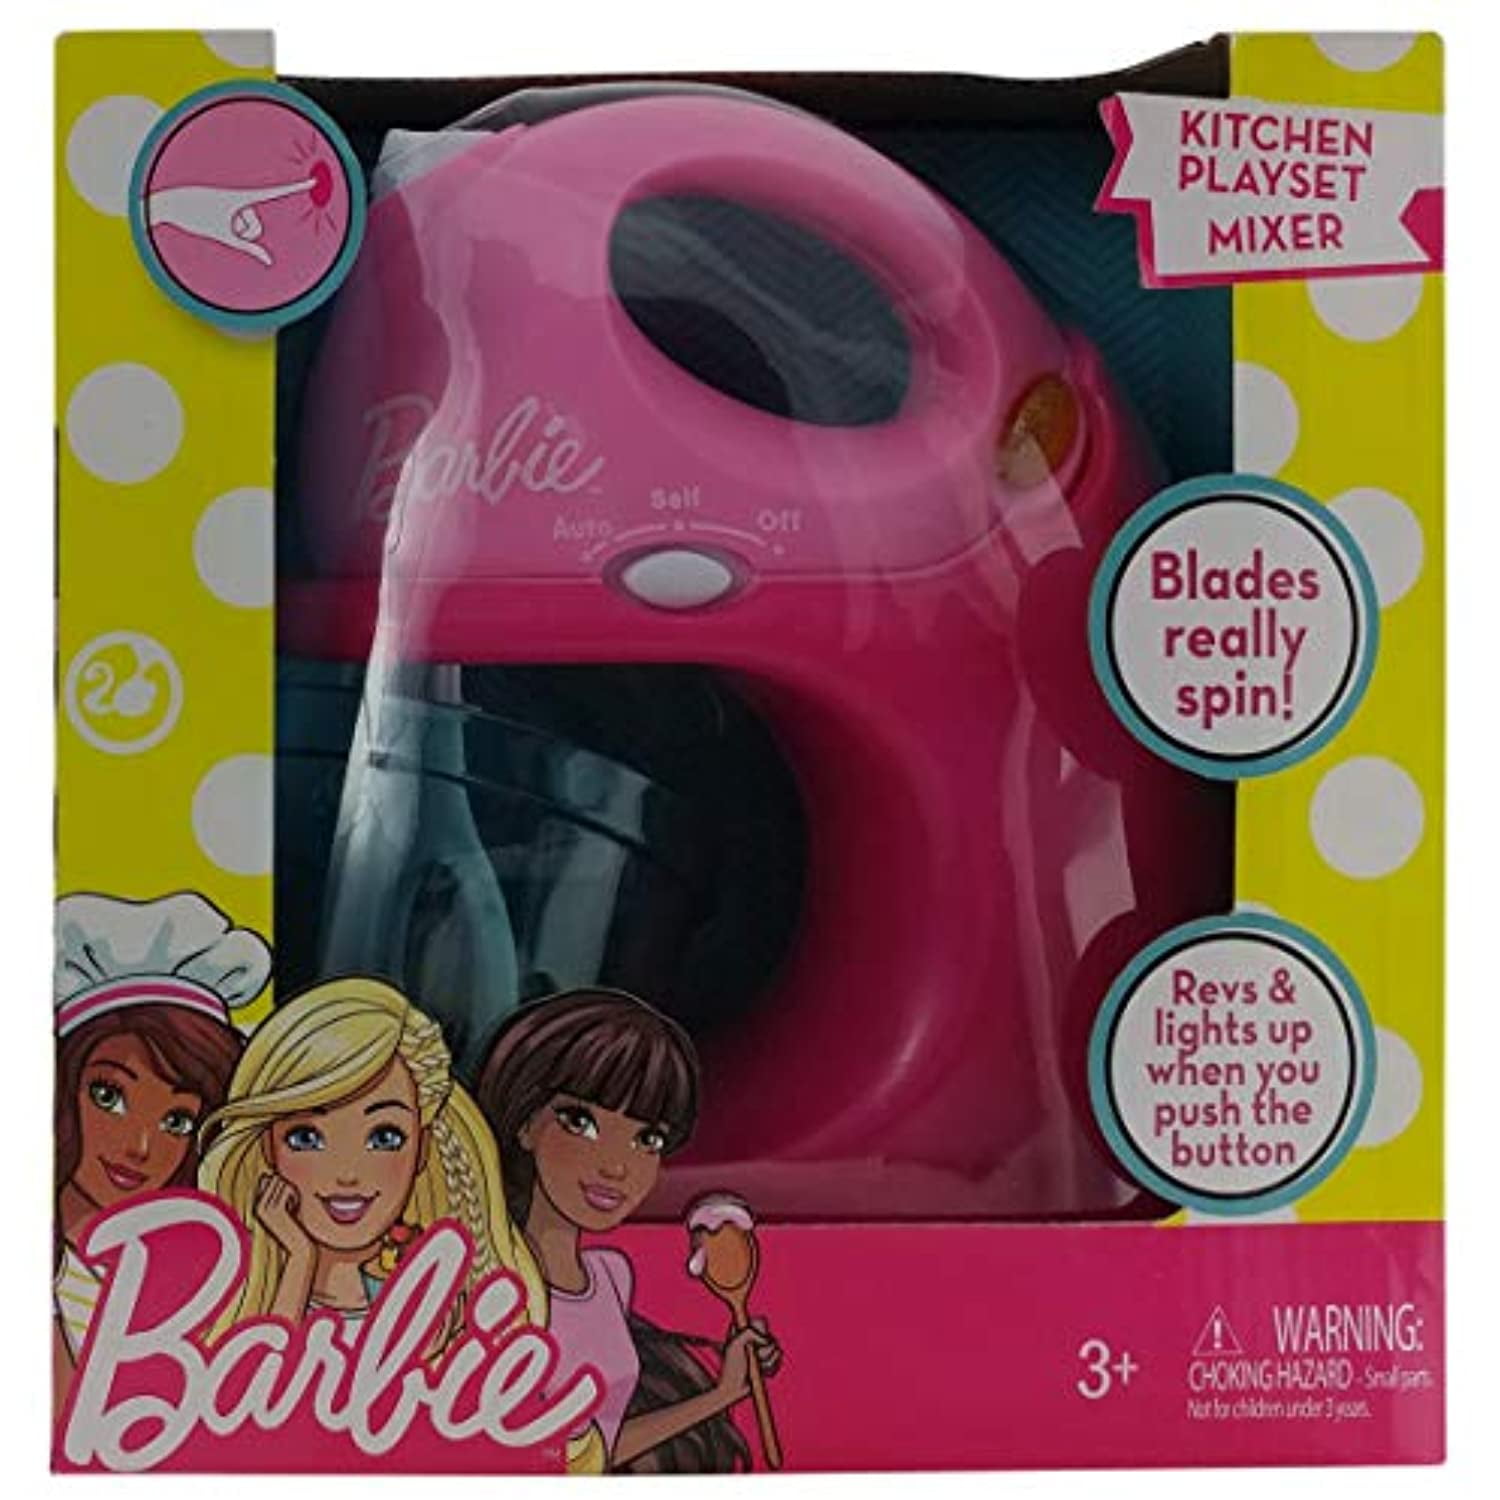 Barbie Kitchen Playset Mixer 